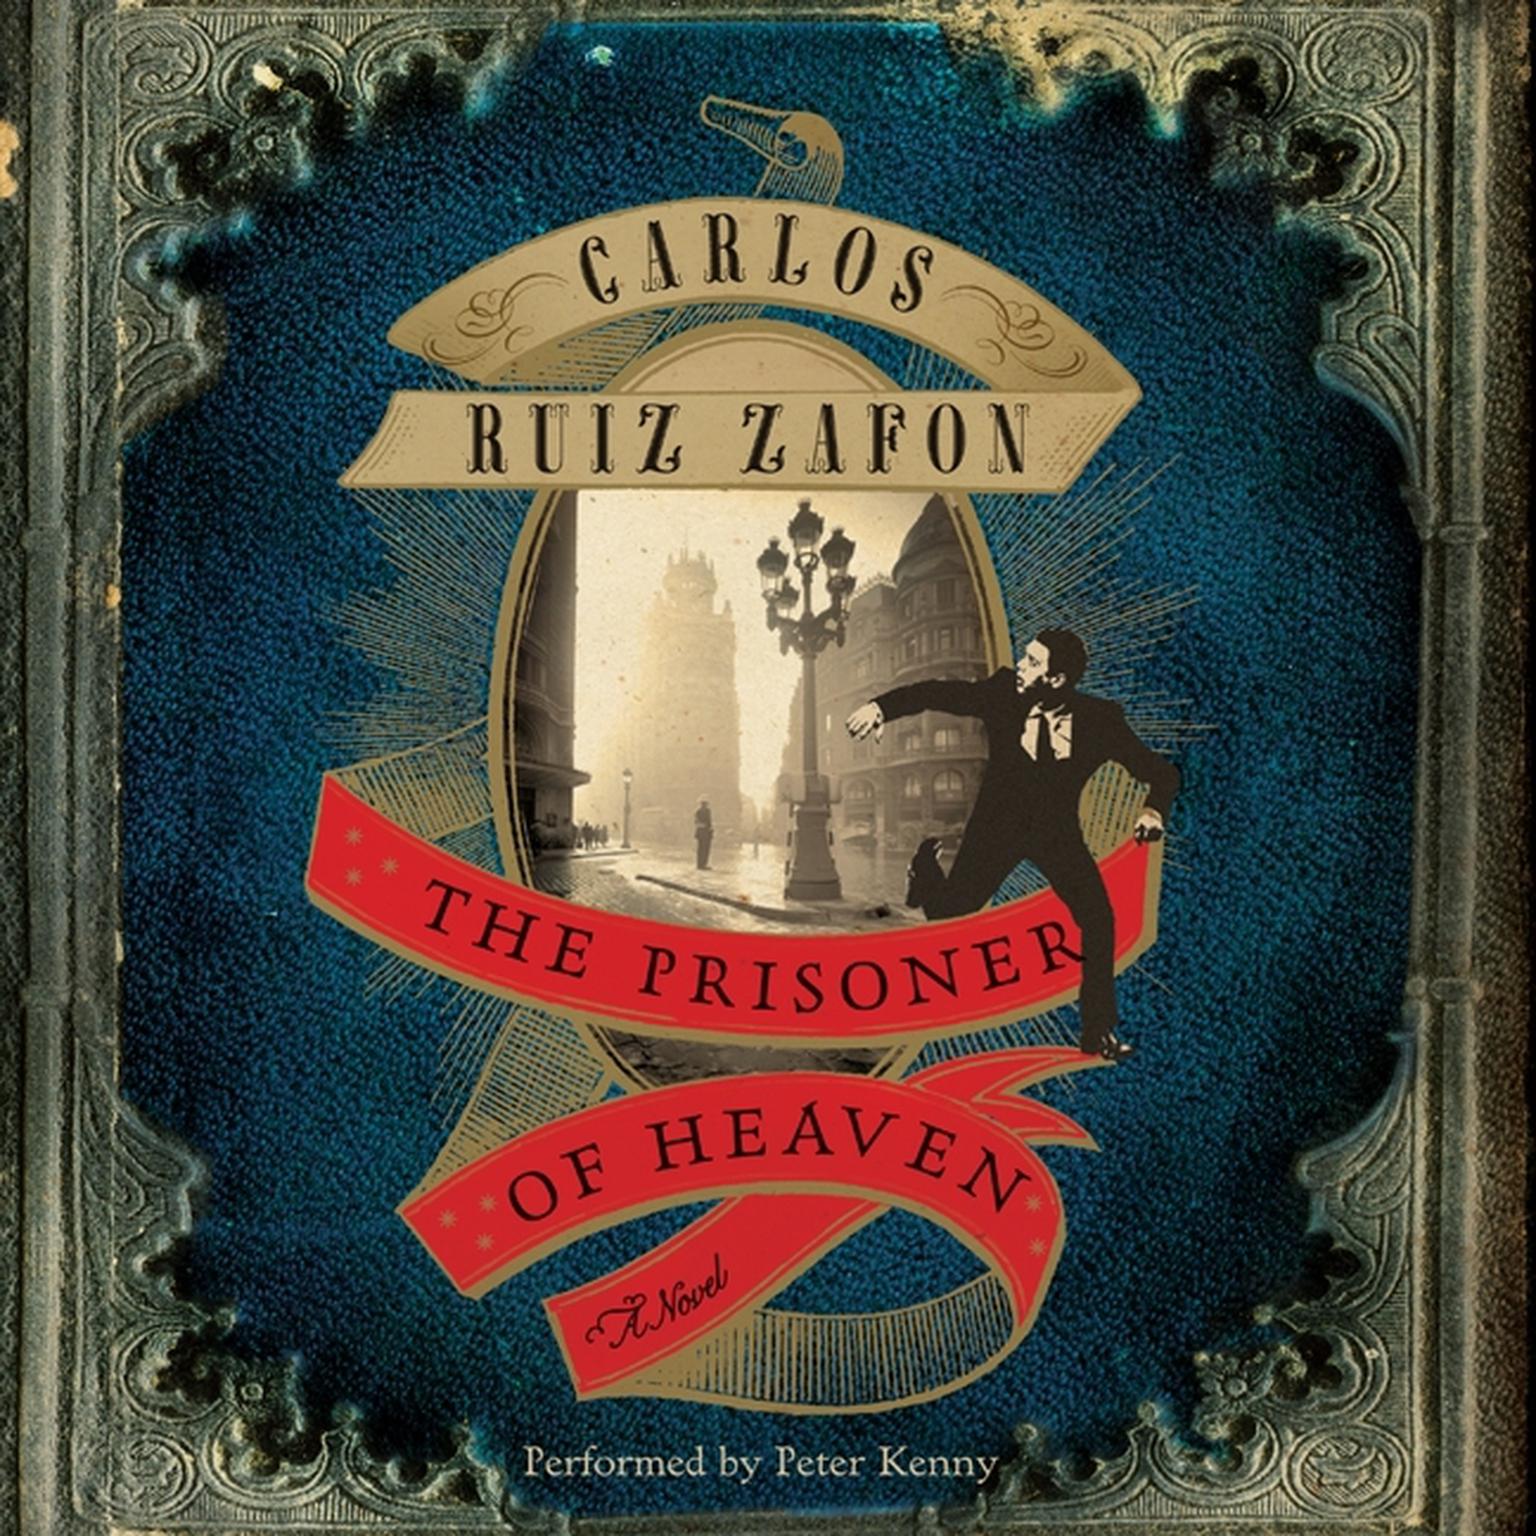 The Prisoner of Heaven: A Novel Audiobook, by Carlos Ruiz Zafón